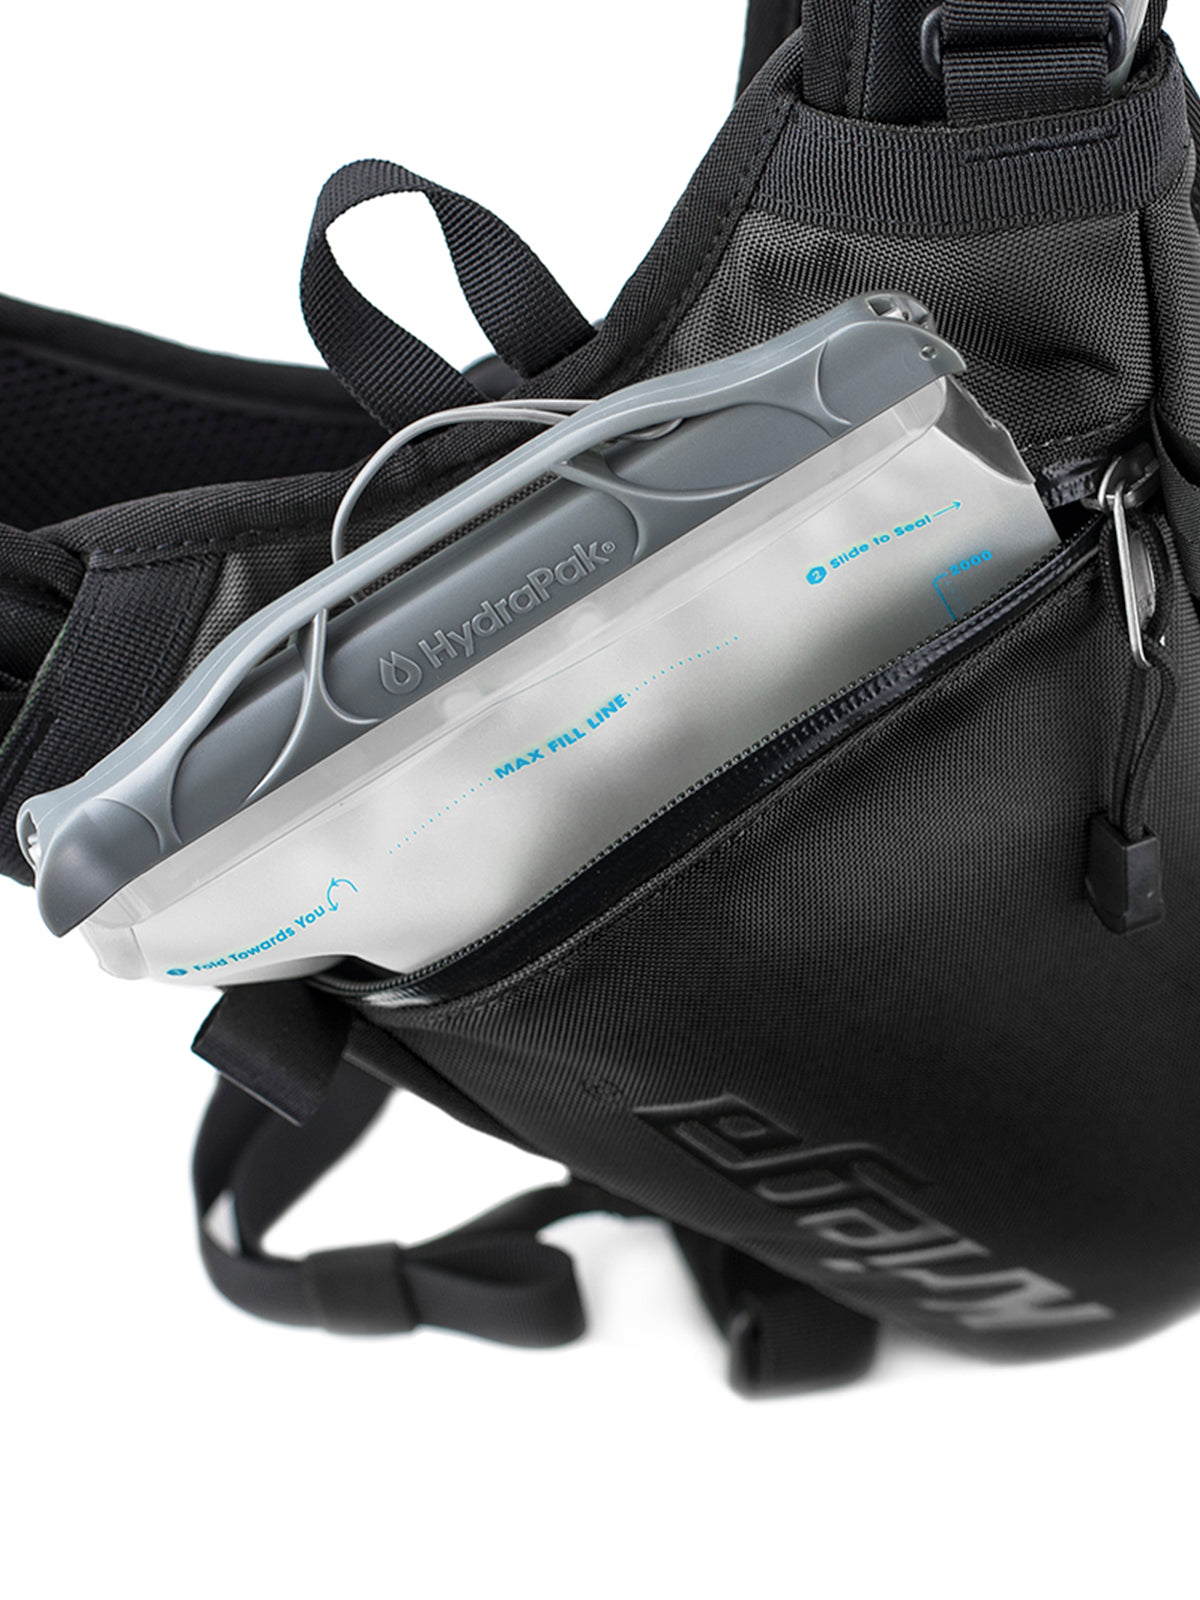 Kriega Hydrapak Shape-Shift™ Reservoir 2-Litre in backpack